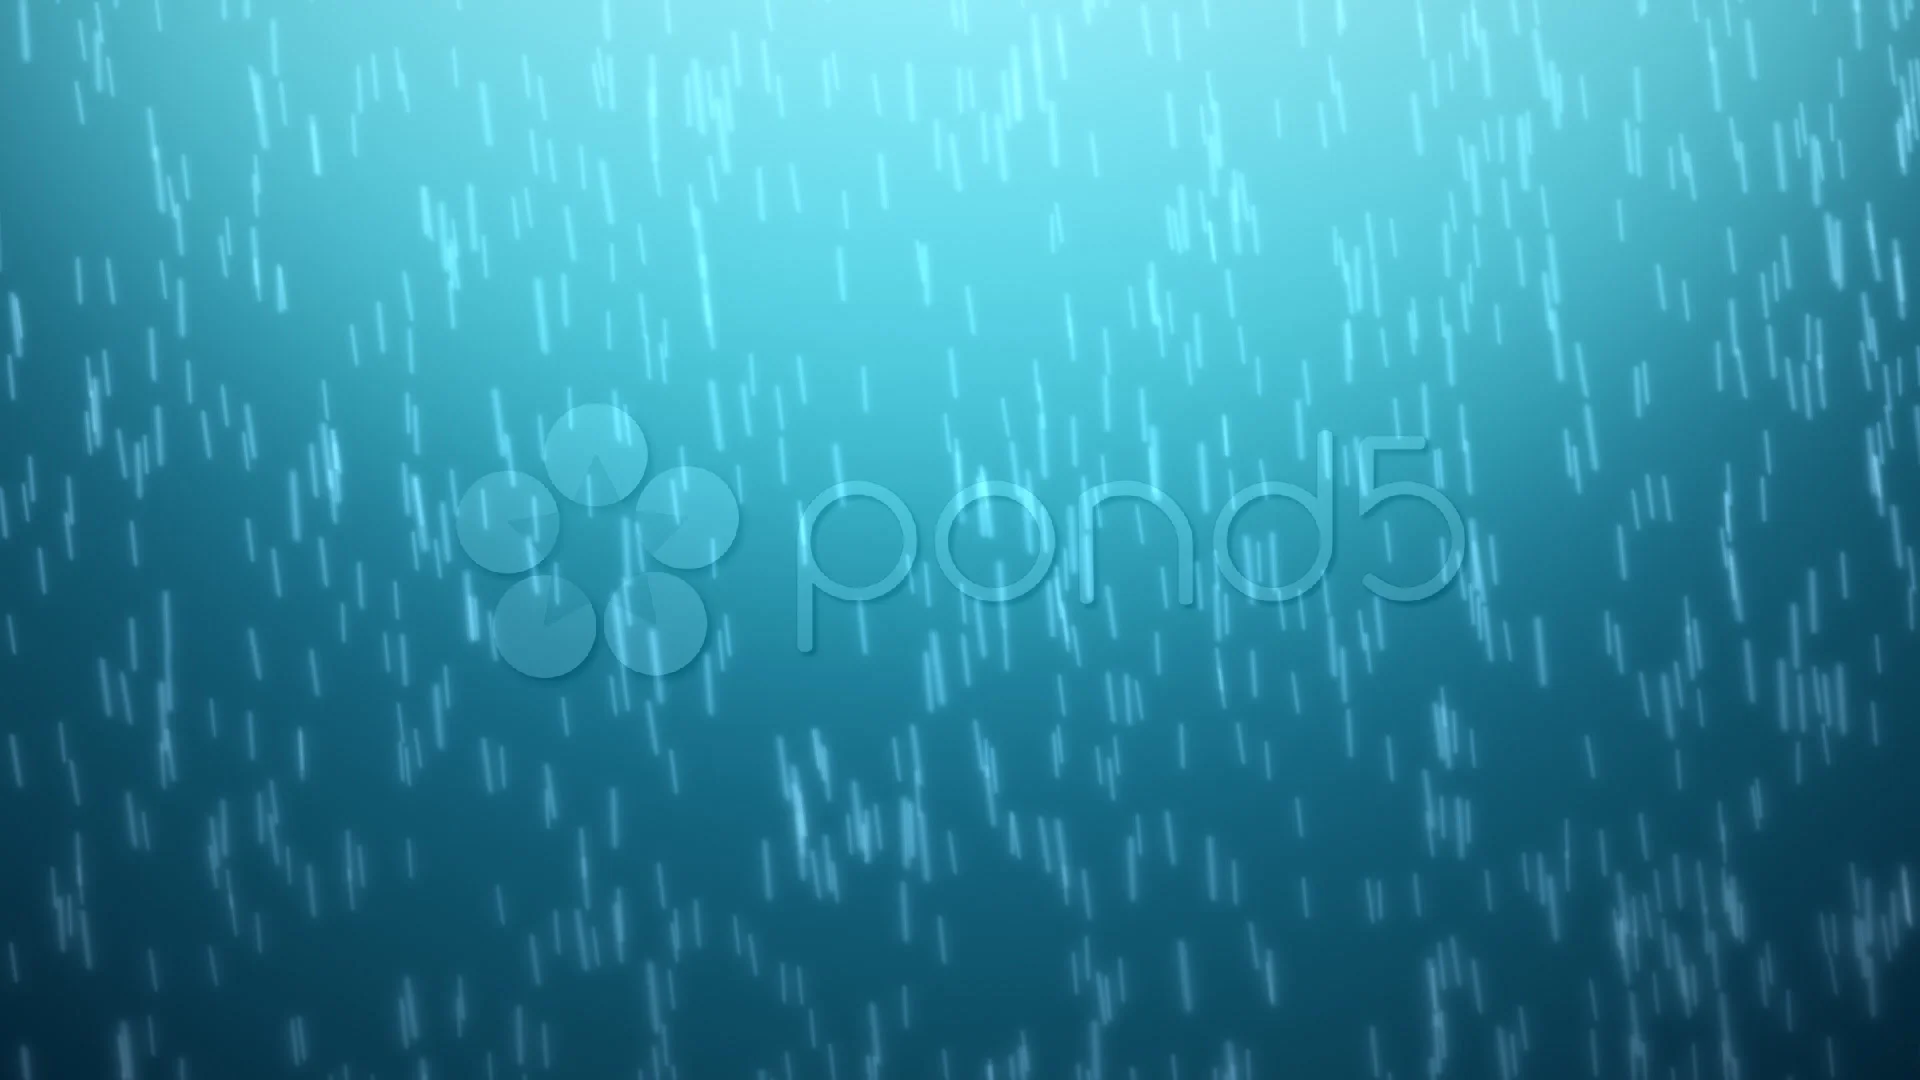 Rain Animation Background Design | Stock Video | Pond5